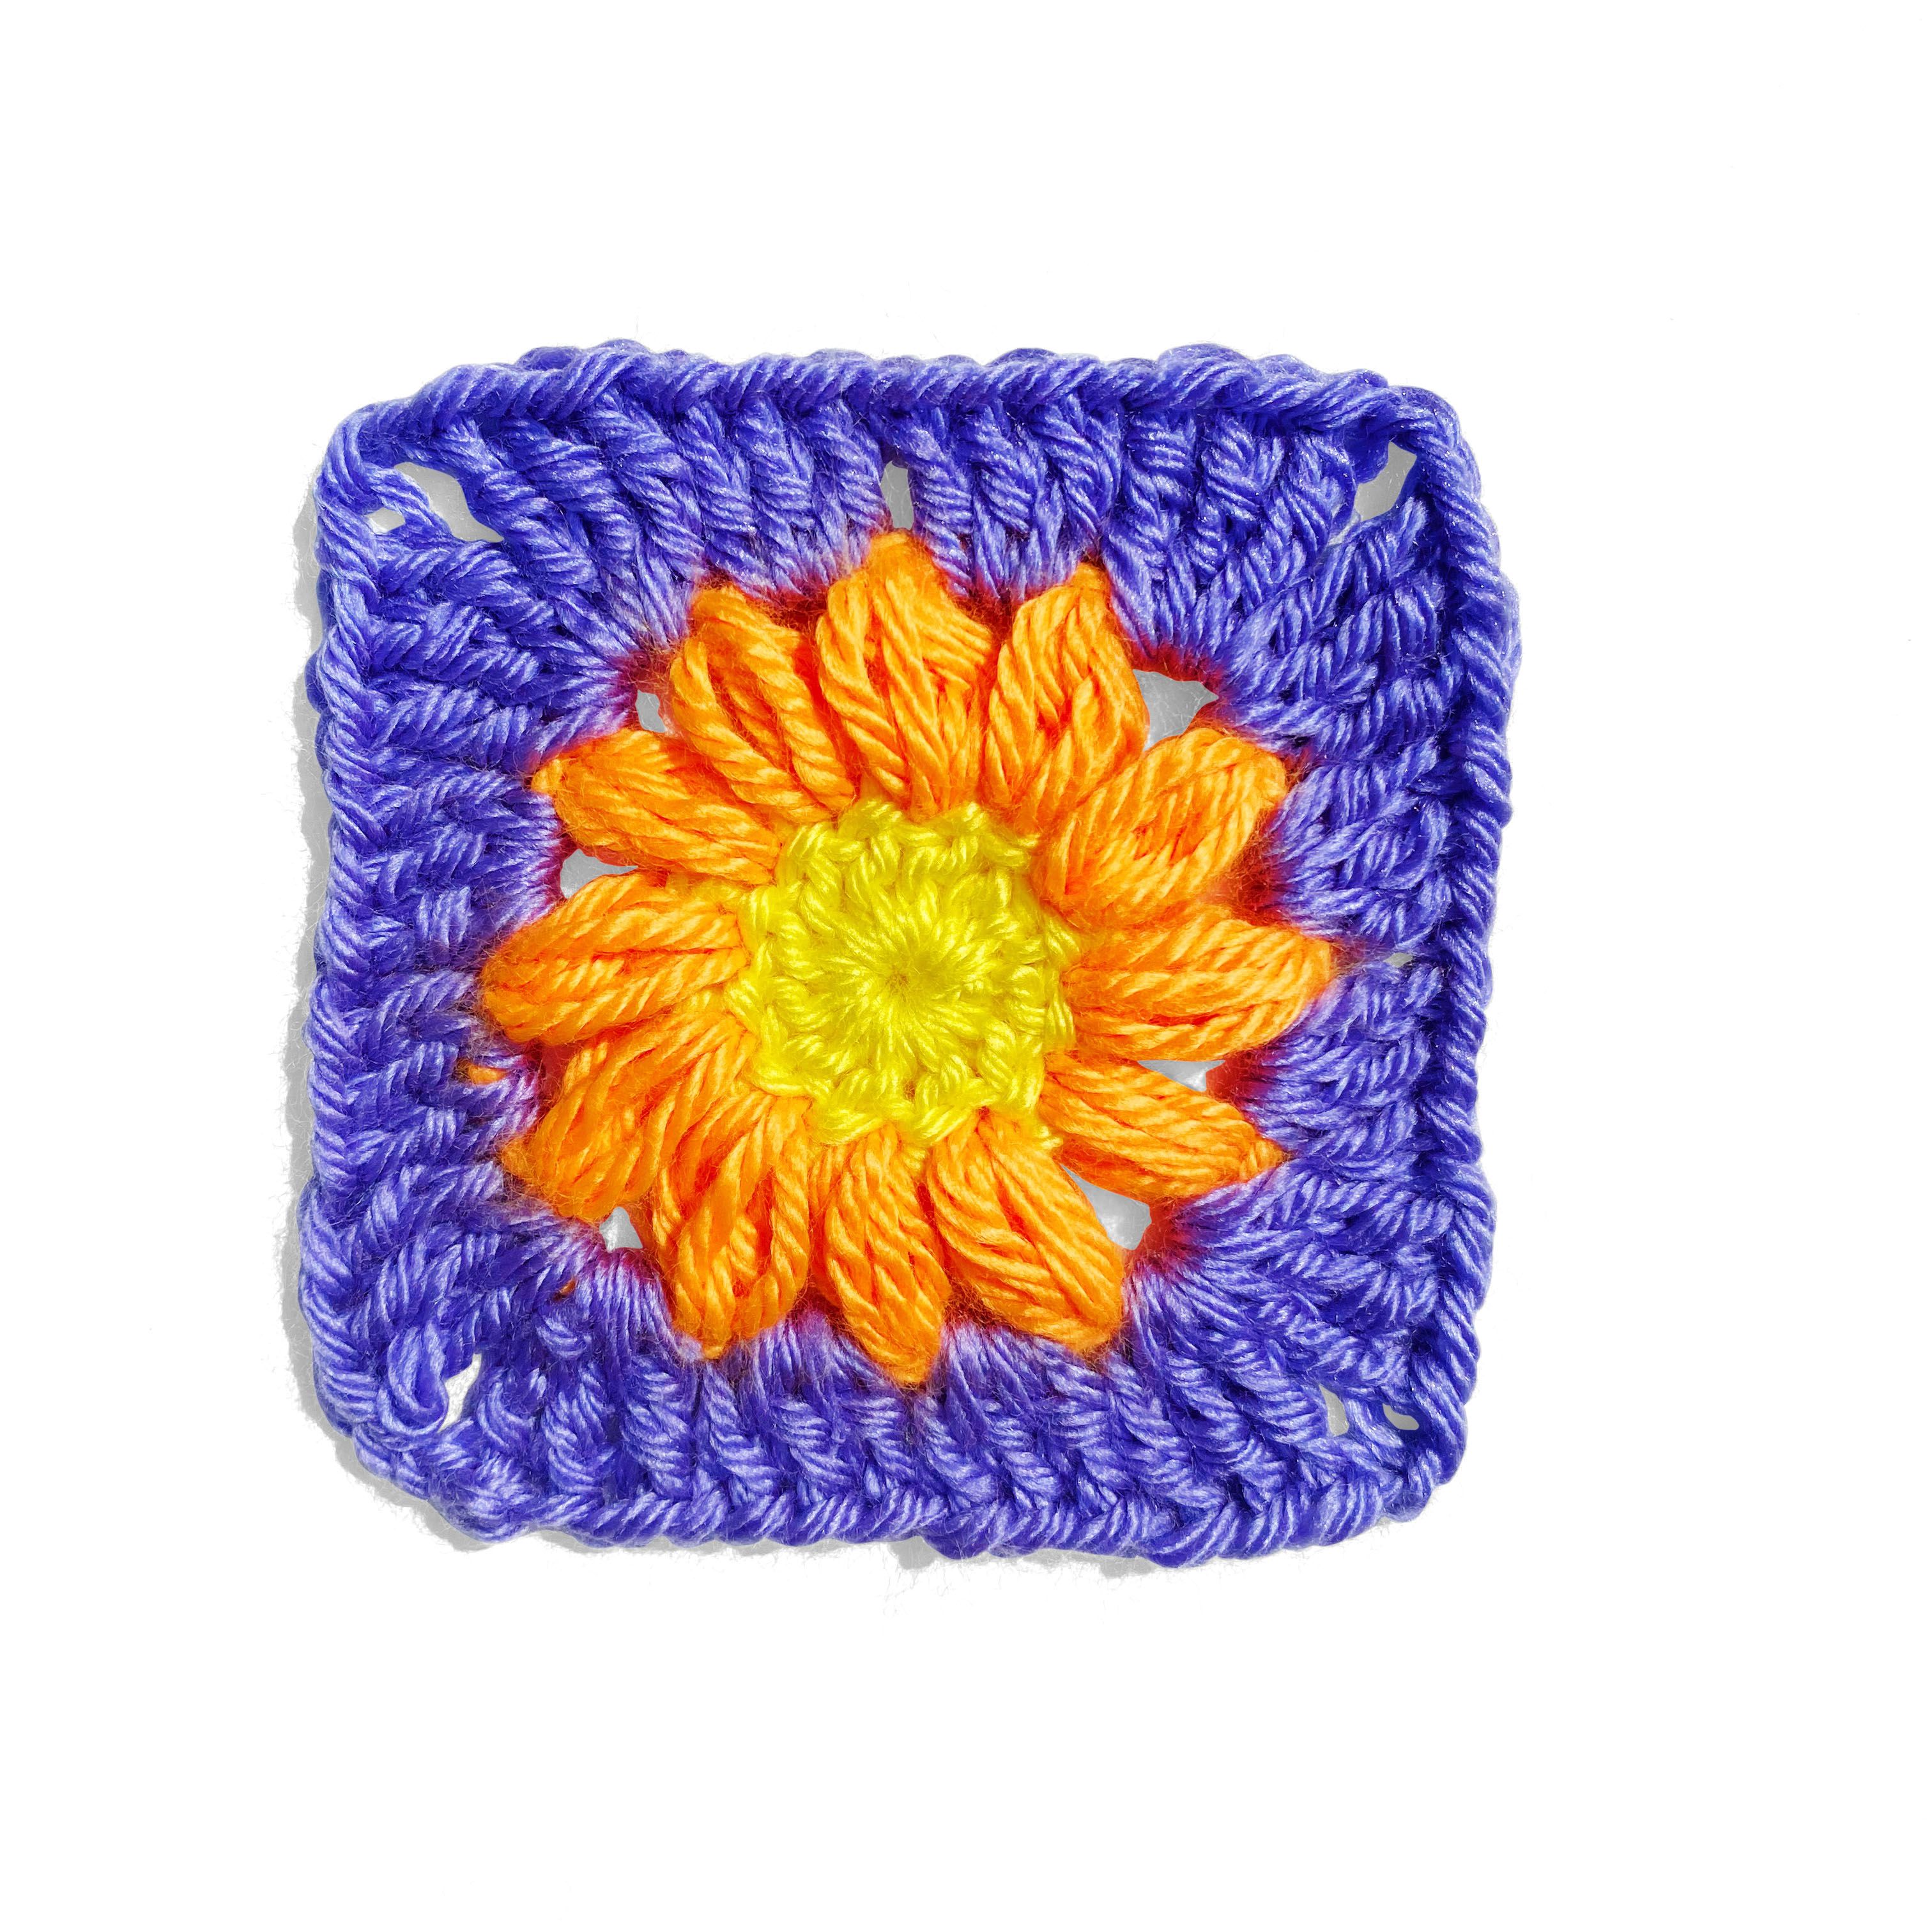 Daisy Granny Square Crochet Tutorial - Crochet Daisy Granny Square Pattern